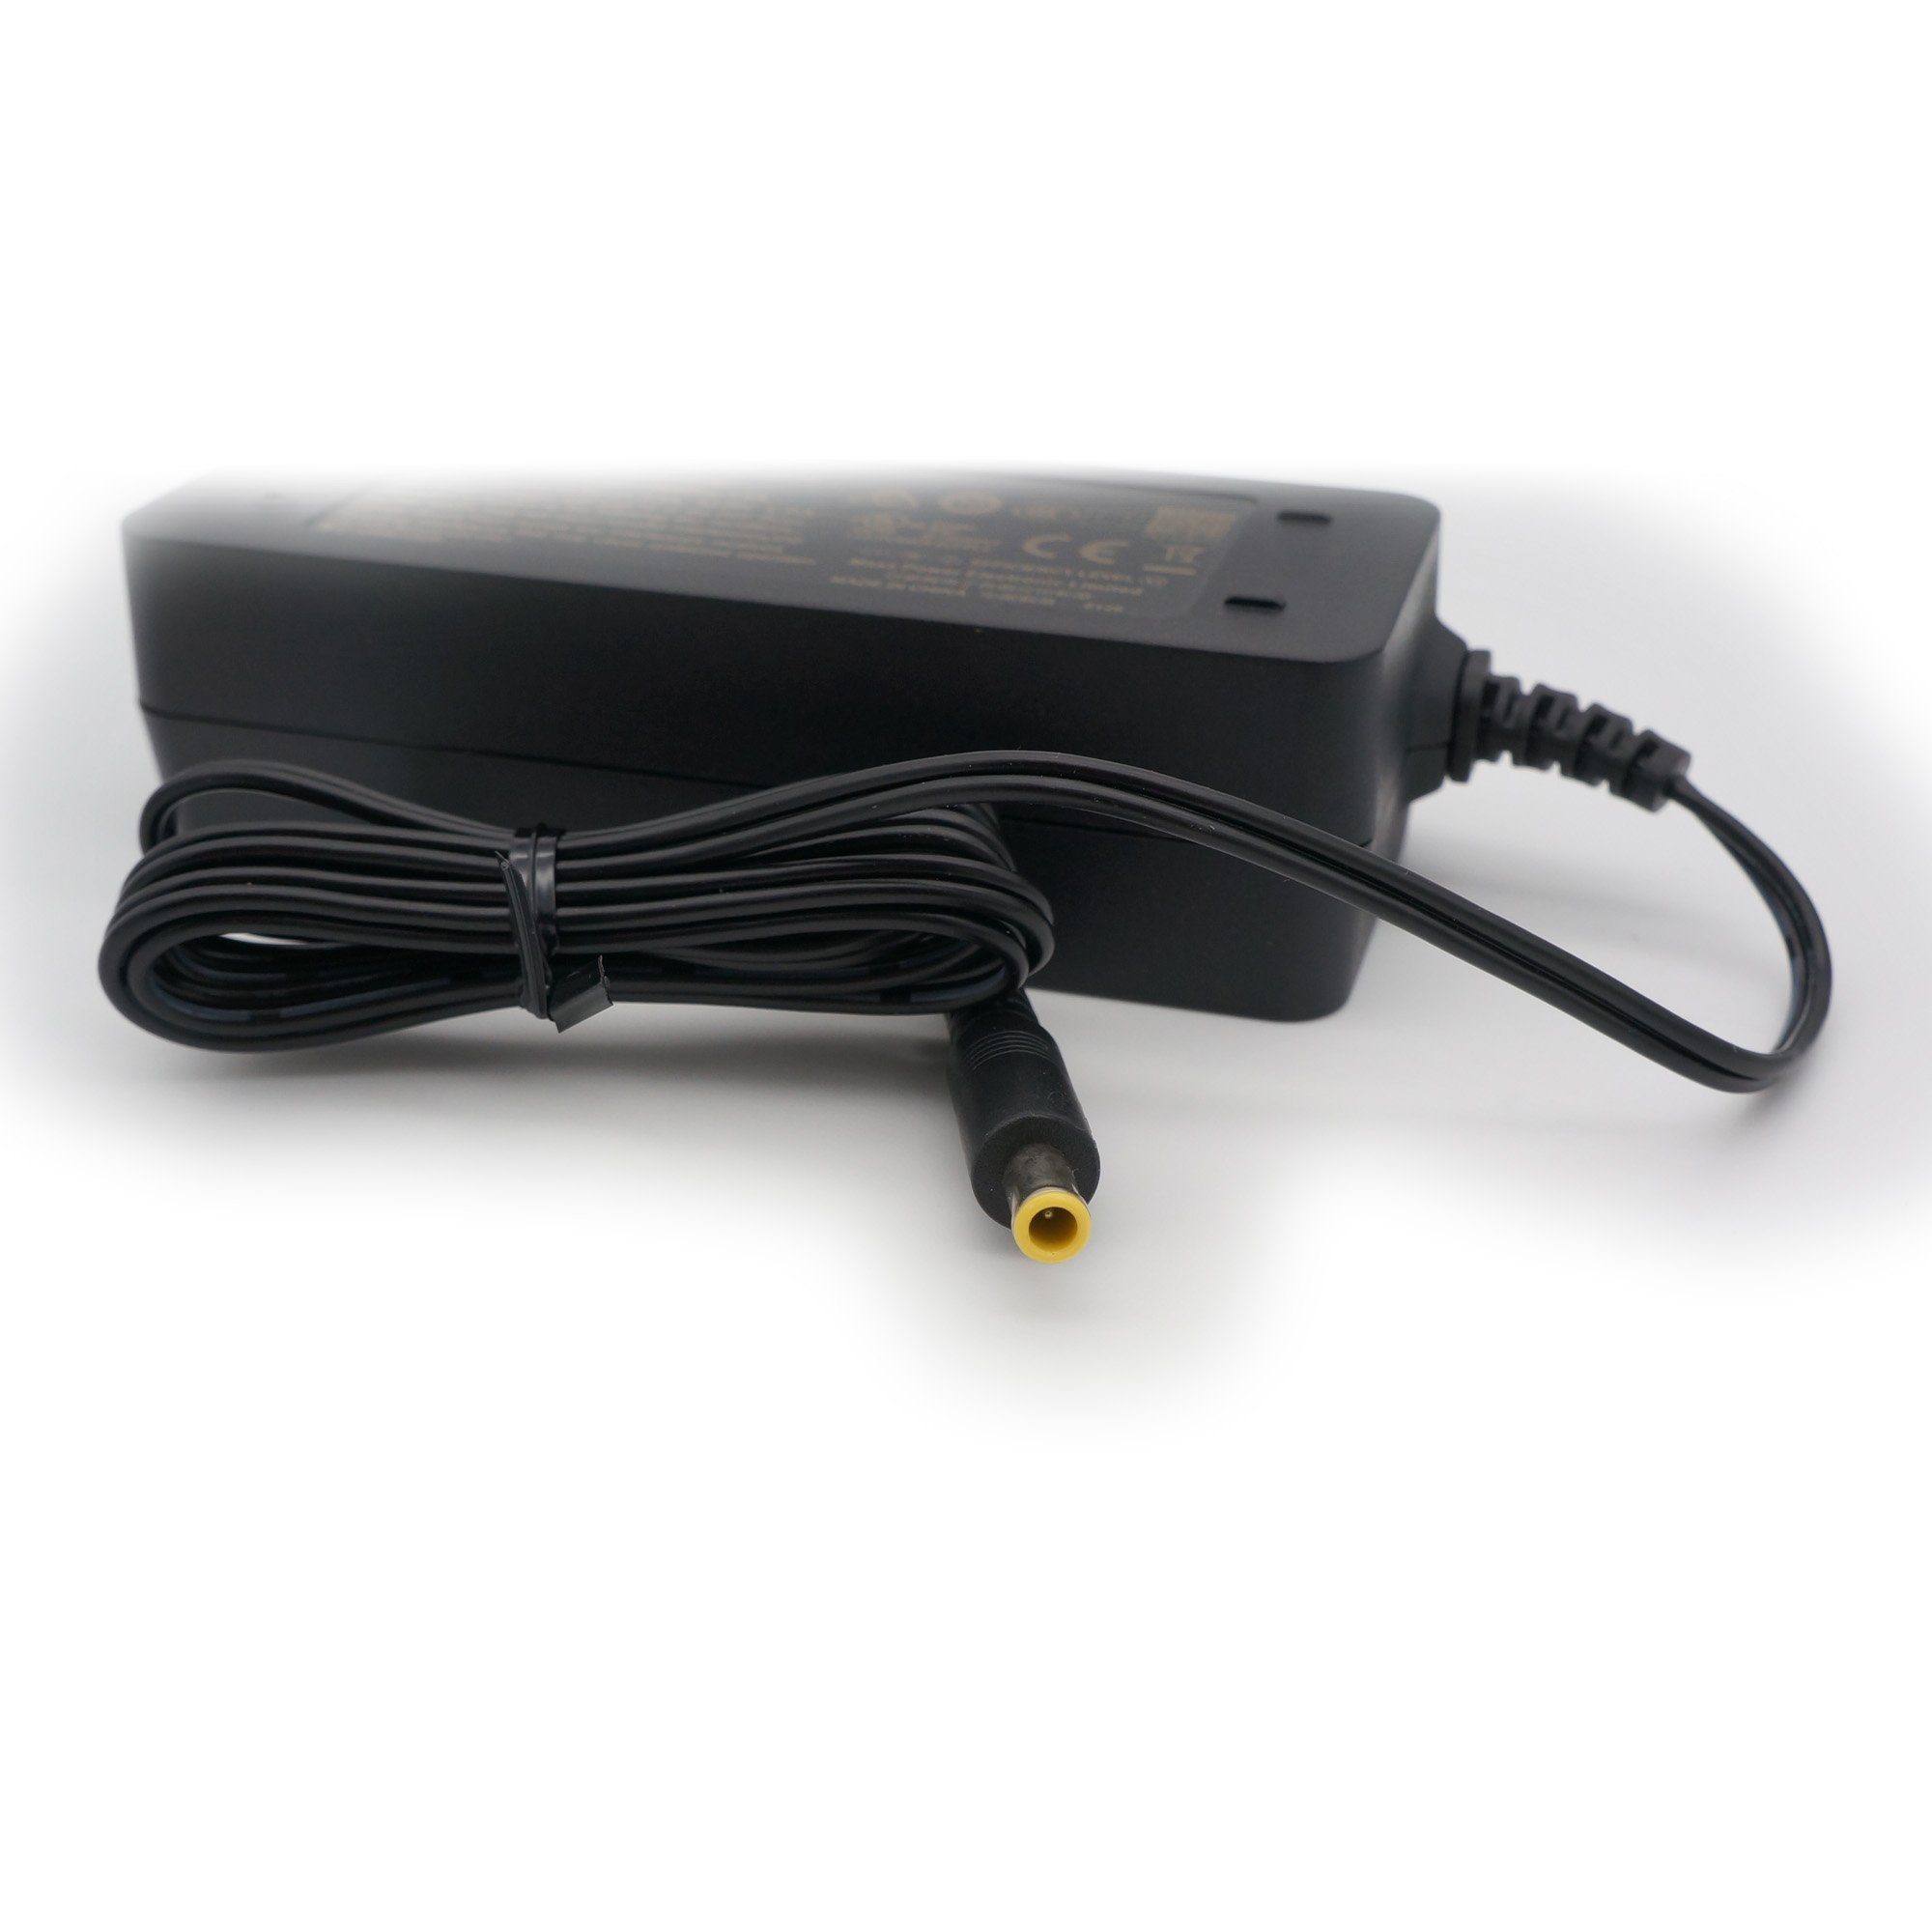 4K Power SE für Netzteil / VU+ 3,5A supply Original 12V VU+ SAT-Receiver Uno